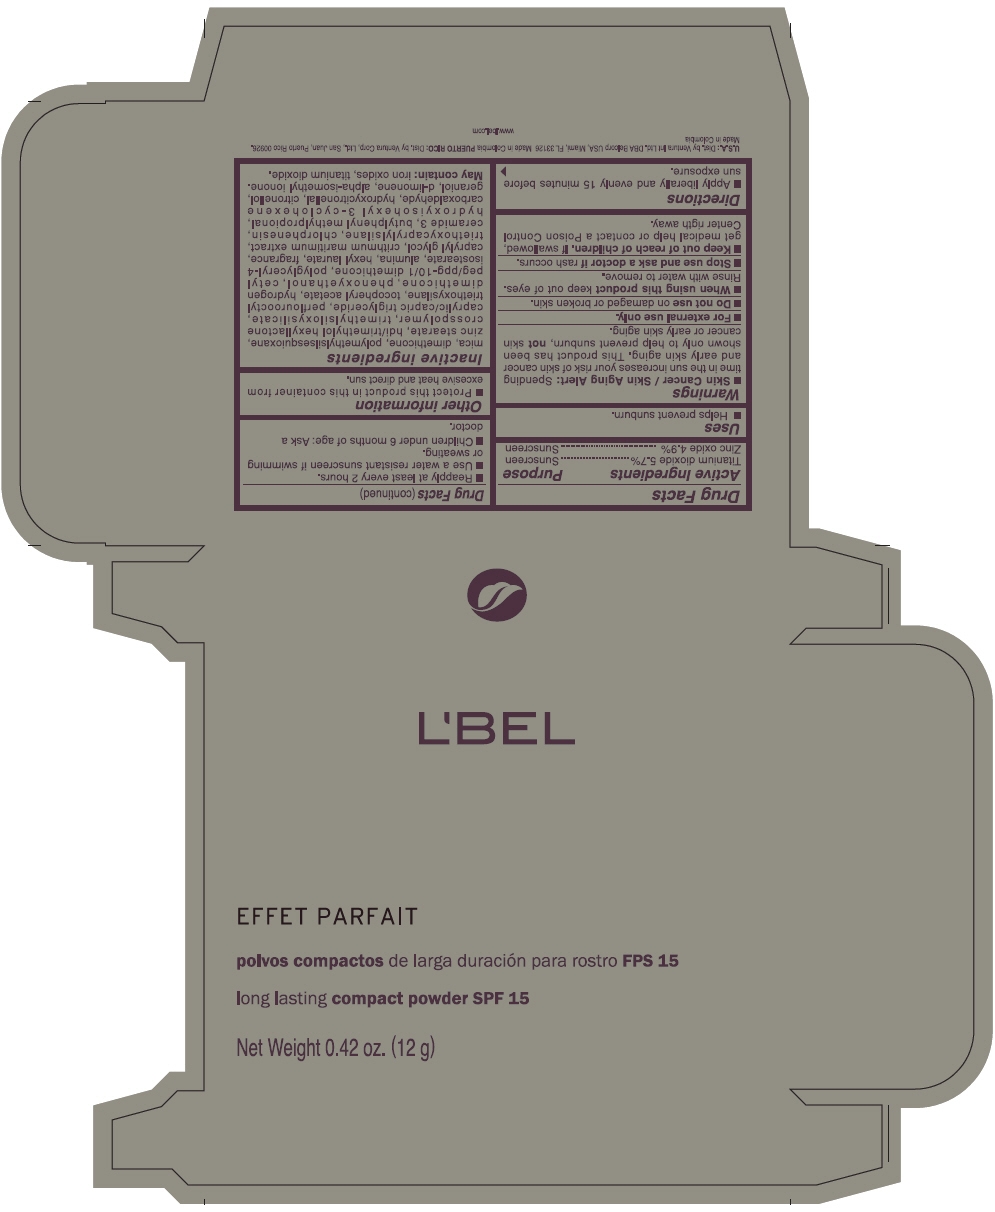 PRINCIPAL DISPLAY PANEL - 12 g Case Box - (CLAIRE 4) - BEIGE